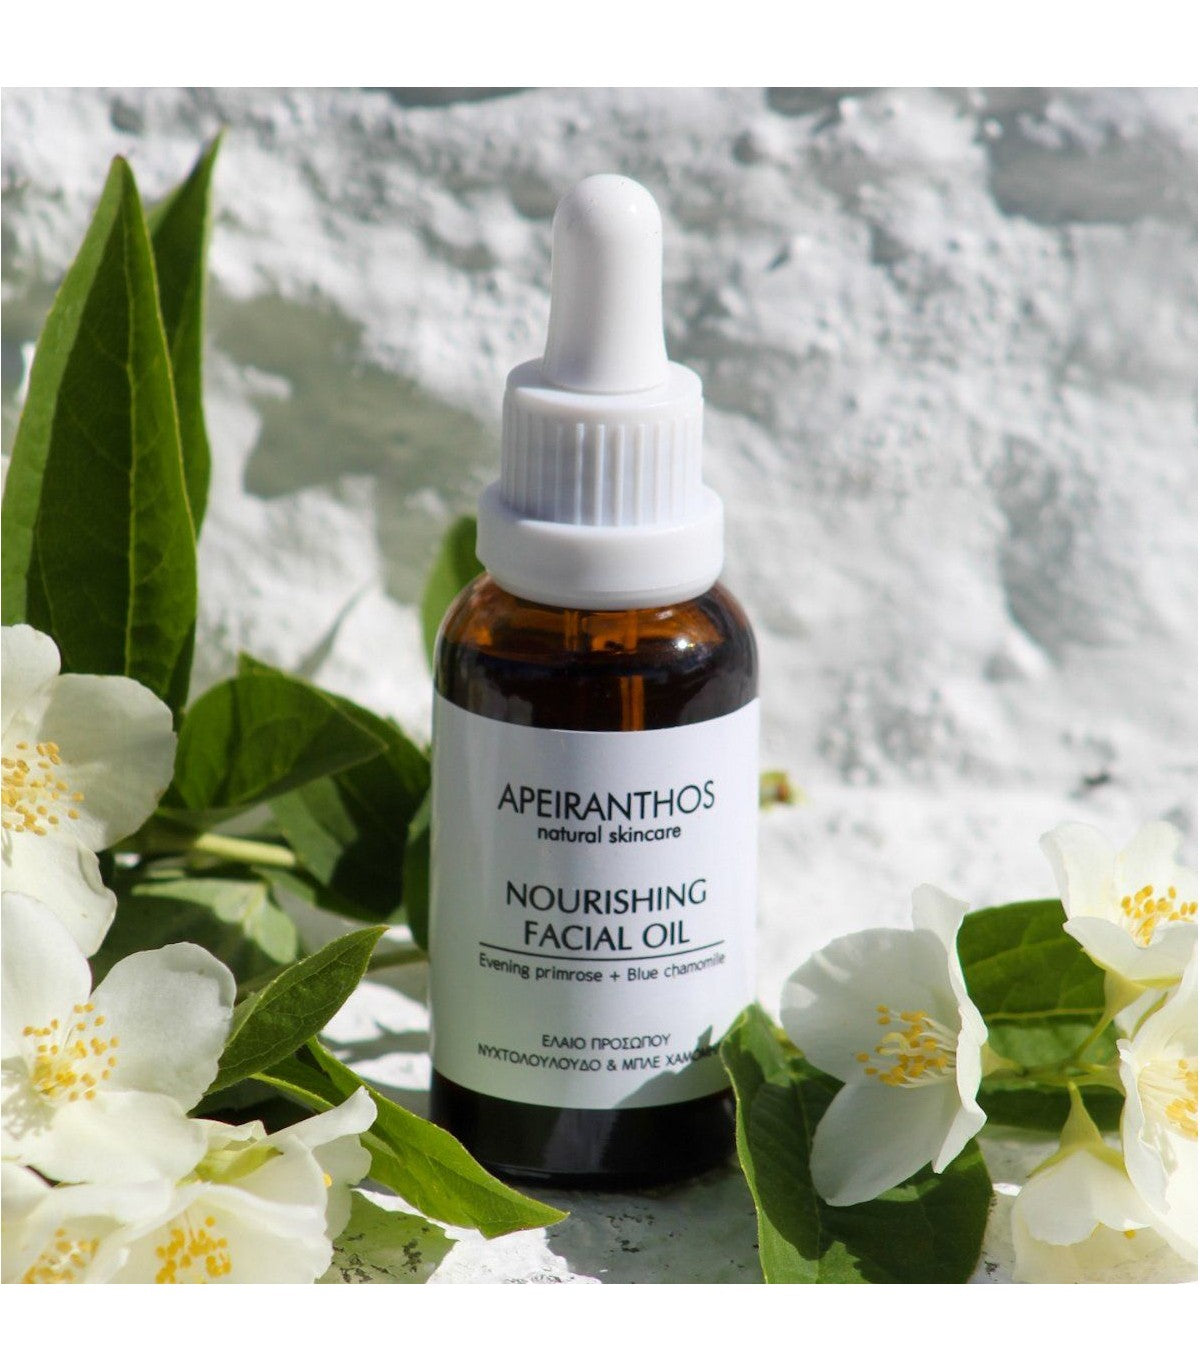 Nourishing facial oil | Evening primrose + Blue chamomile